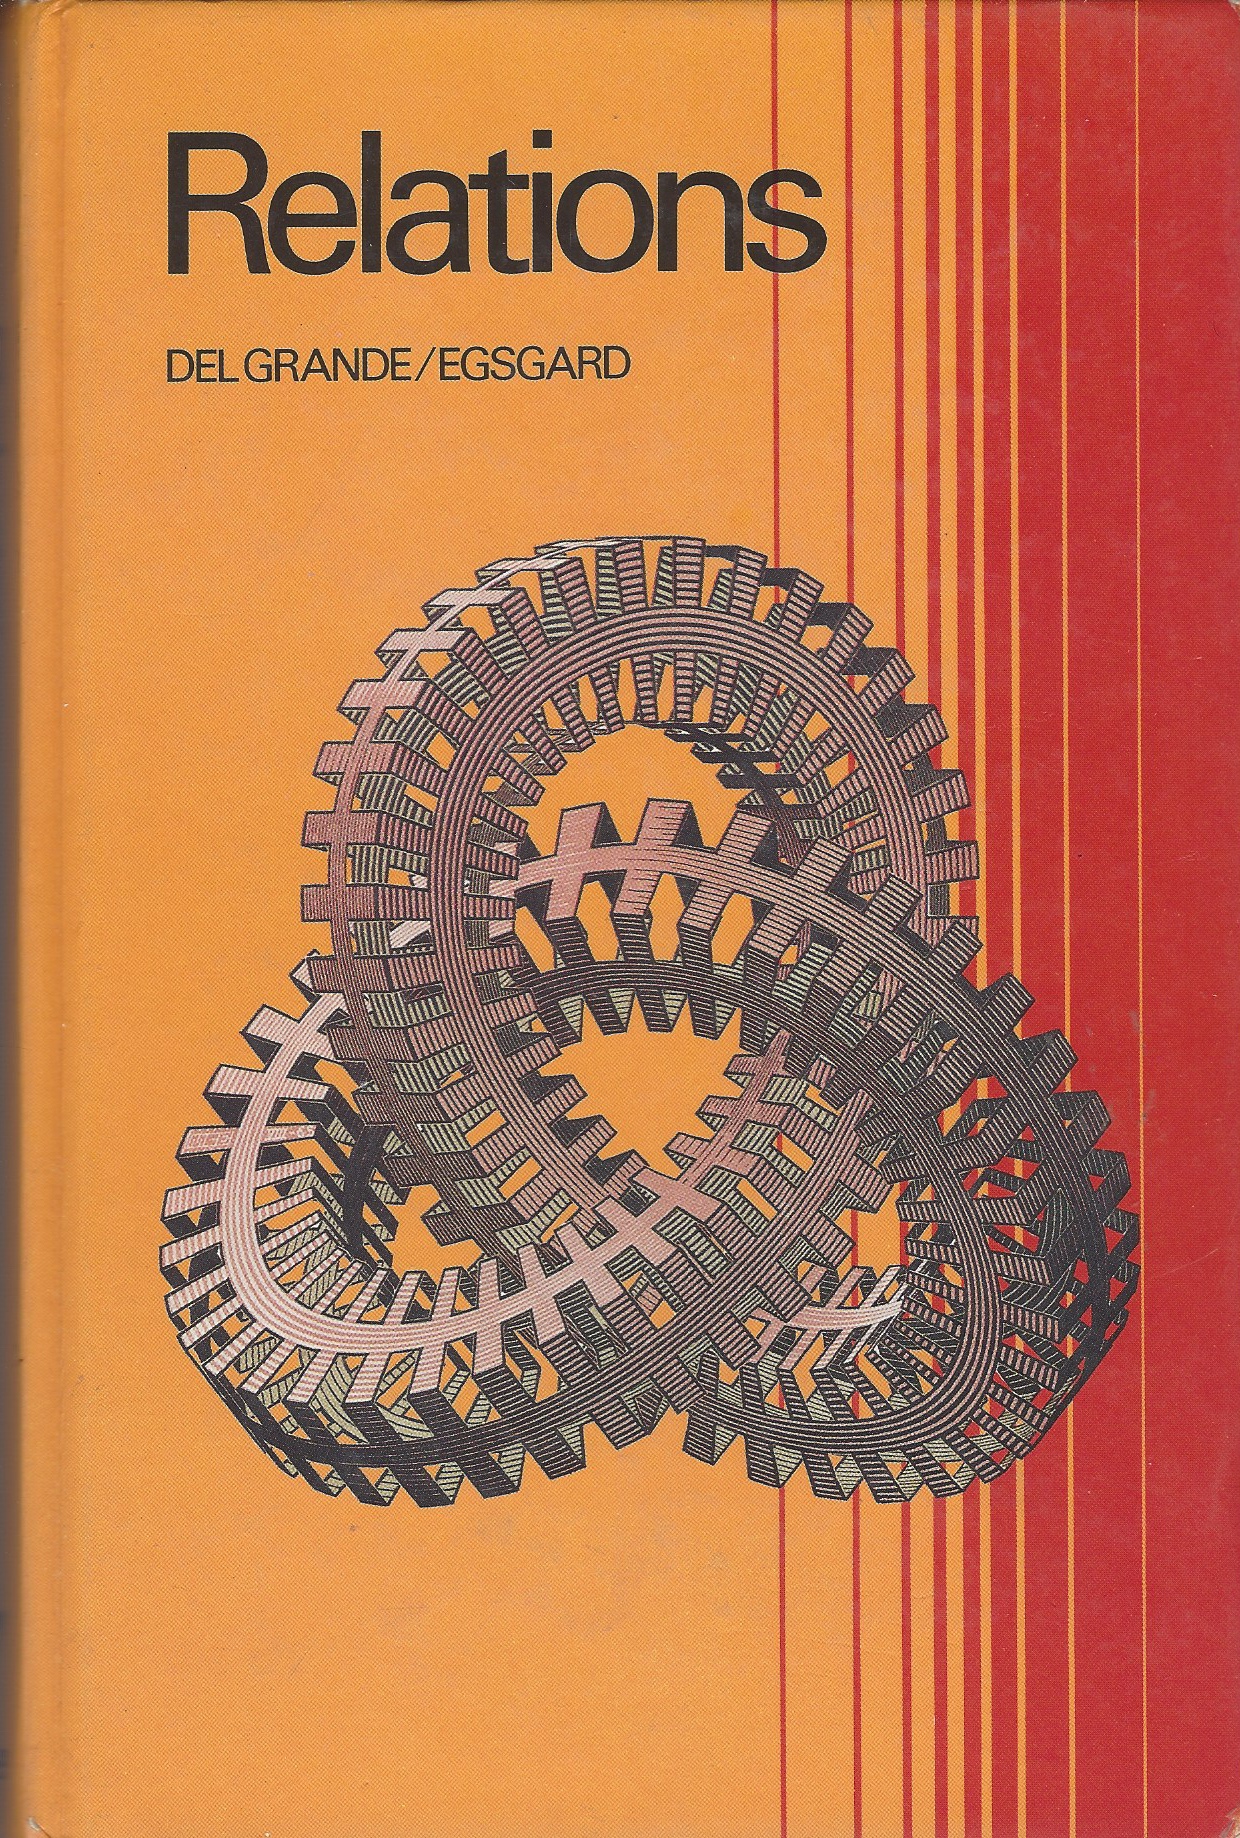 DEL GRANDE J.J, EGSGARD J.C. - Relations: Elements of Modern Mathematices